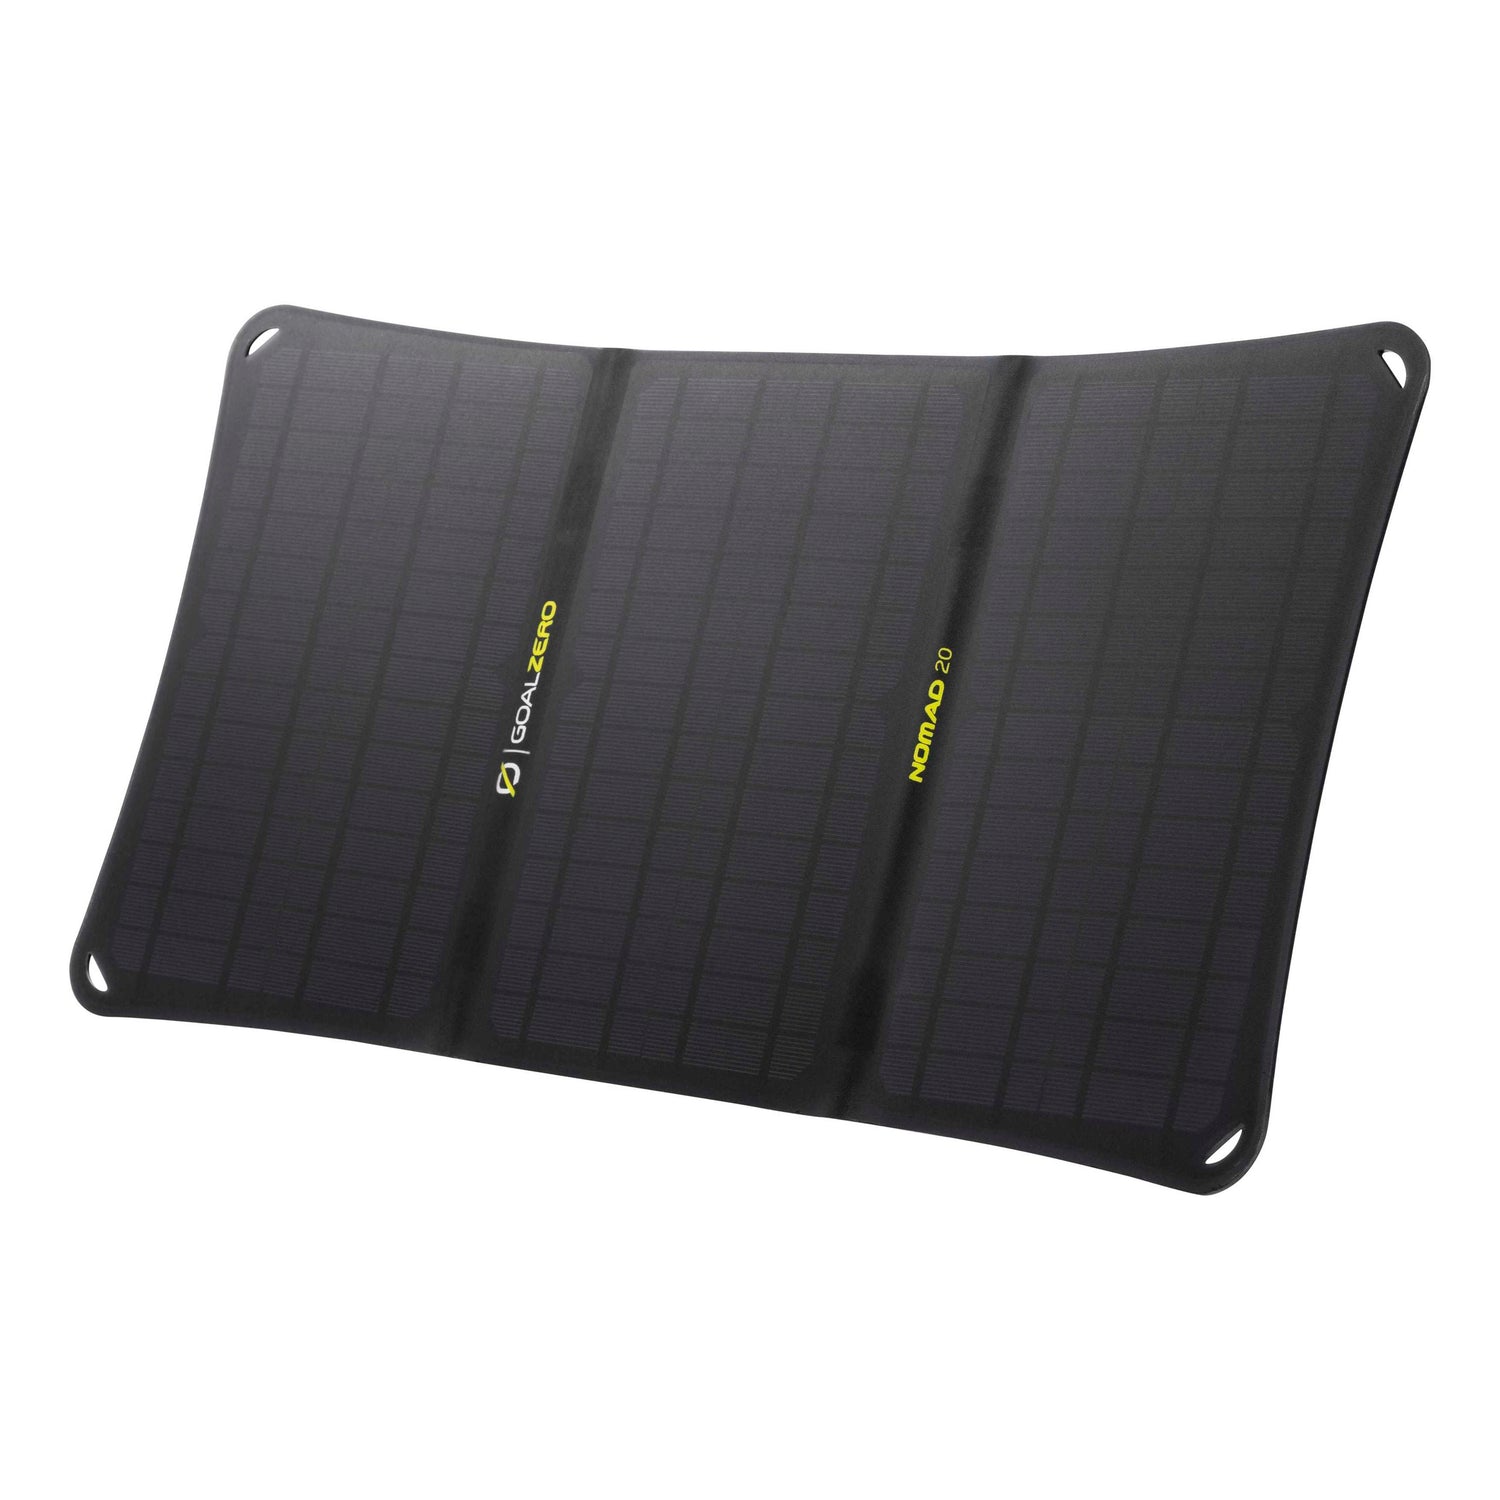 Goalzero Nomad 20 Solar Panel